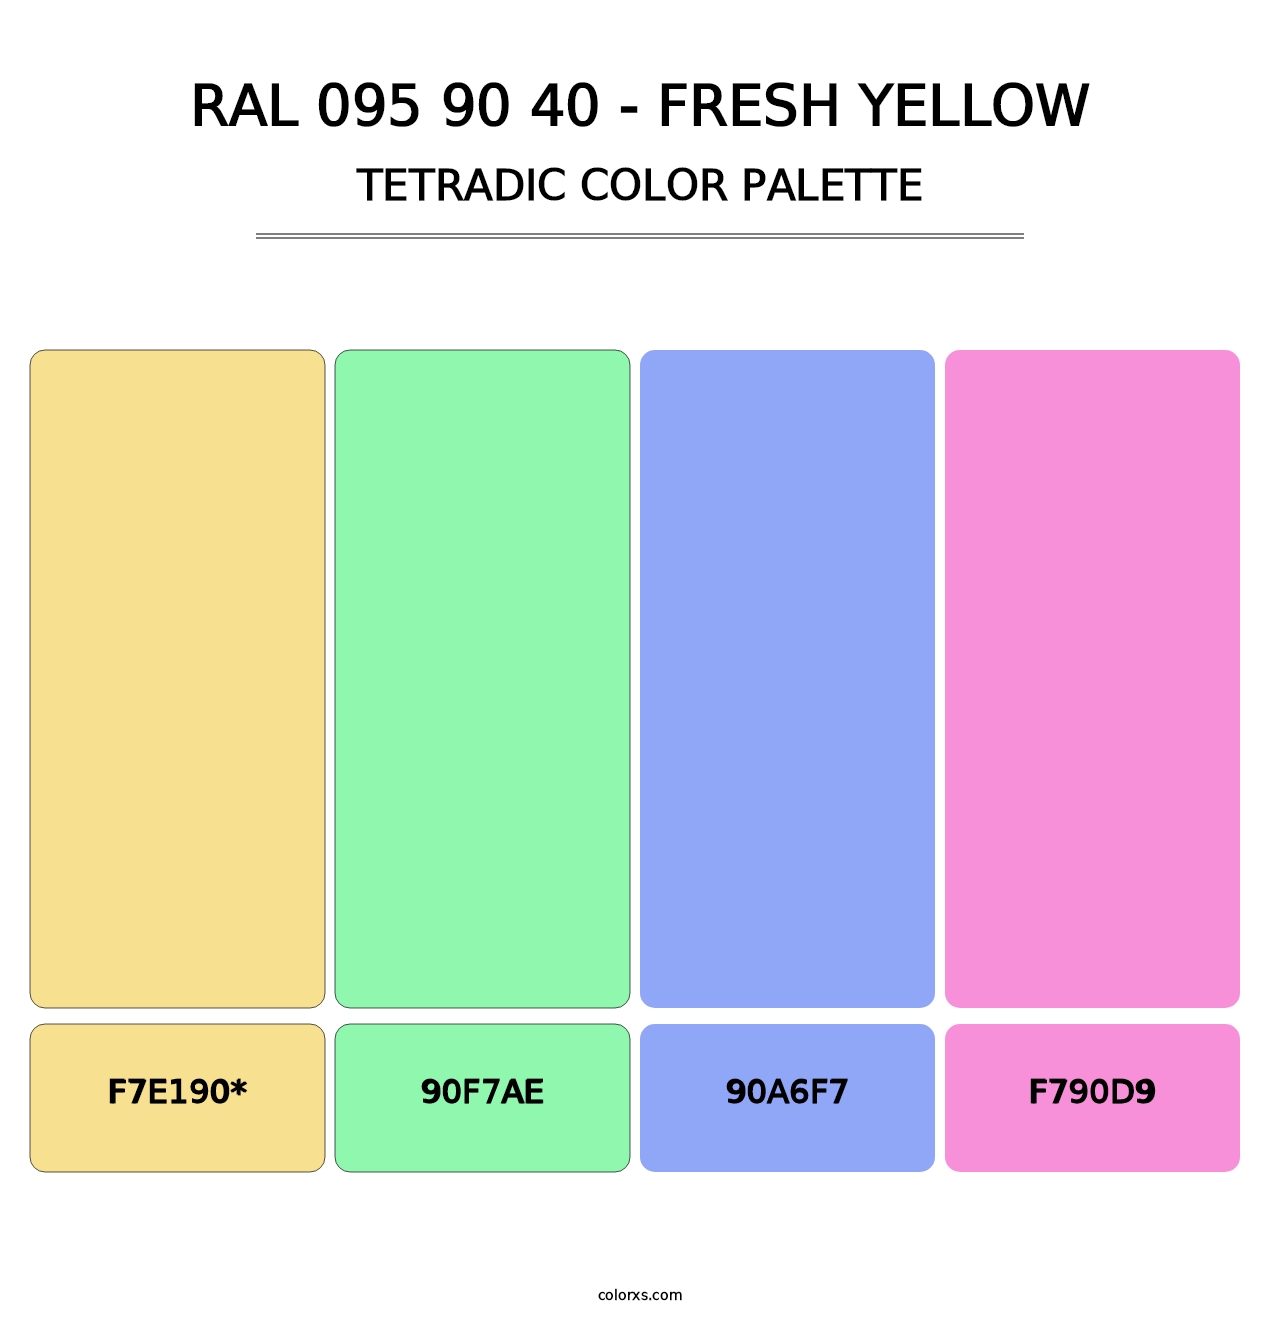 RAL 095 90 40 - Fresh Yellow - Tetradic Color Palette